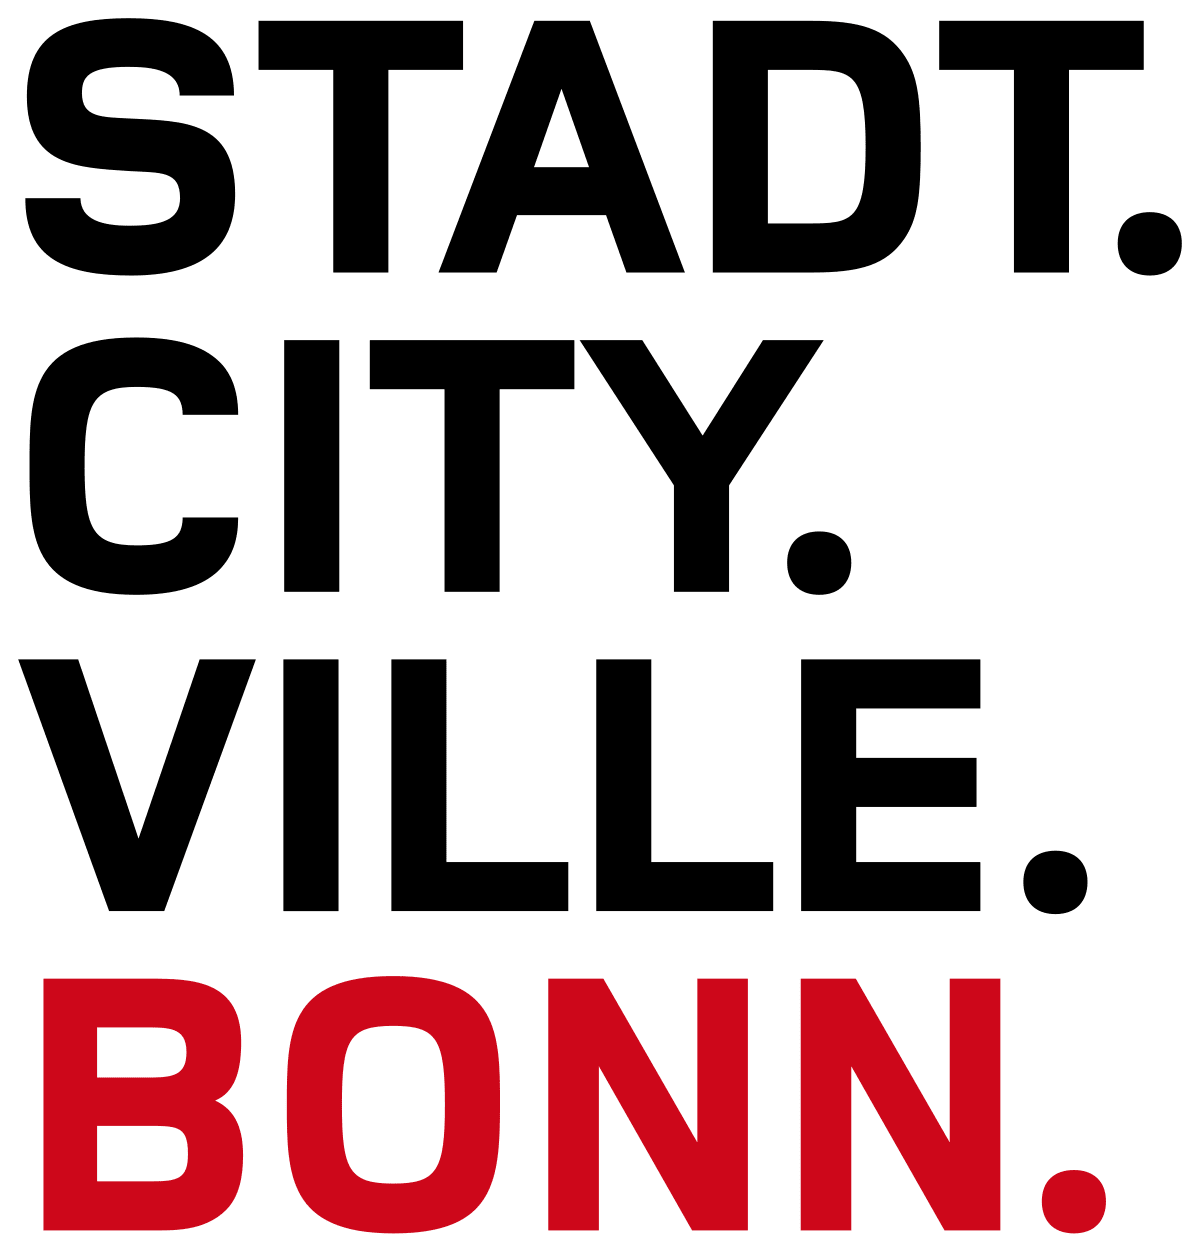 Bundesstadt Bonn-logo